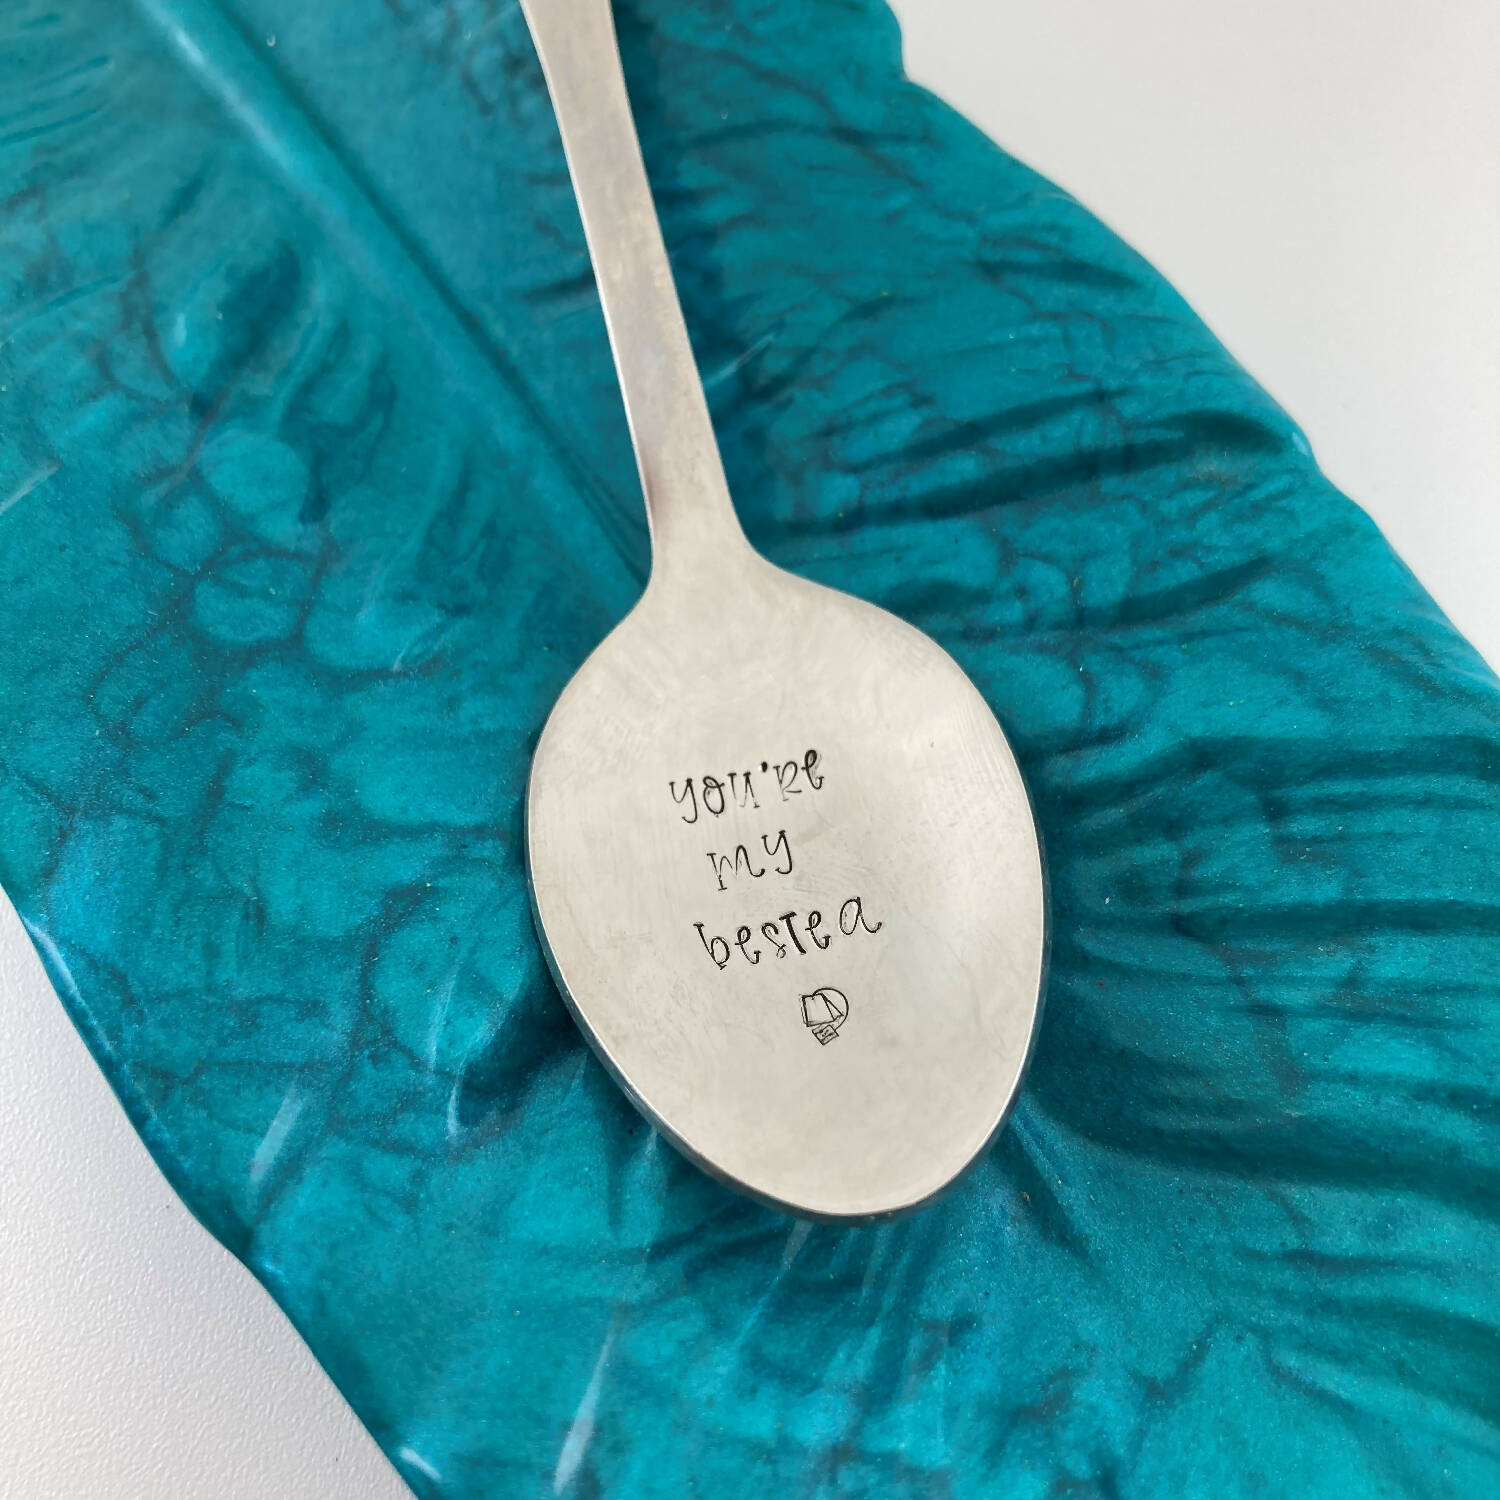 Cutlery - you're my bestea teaspoon